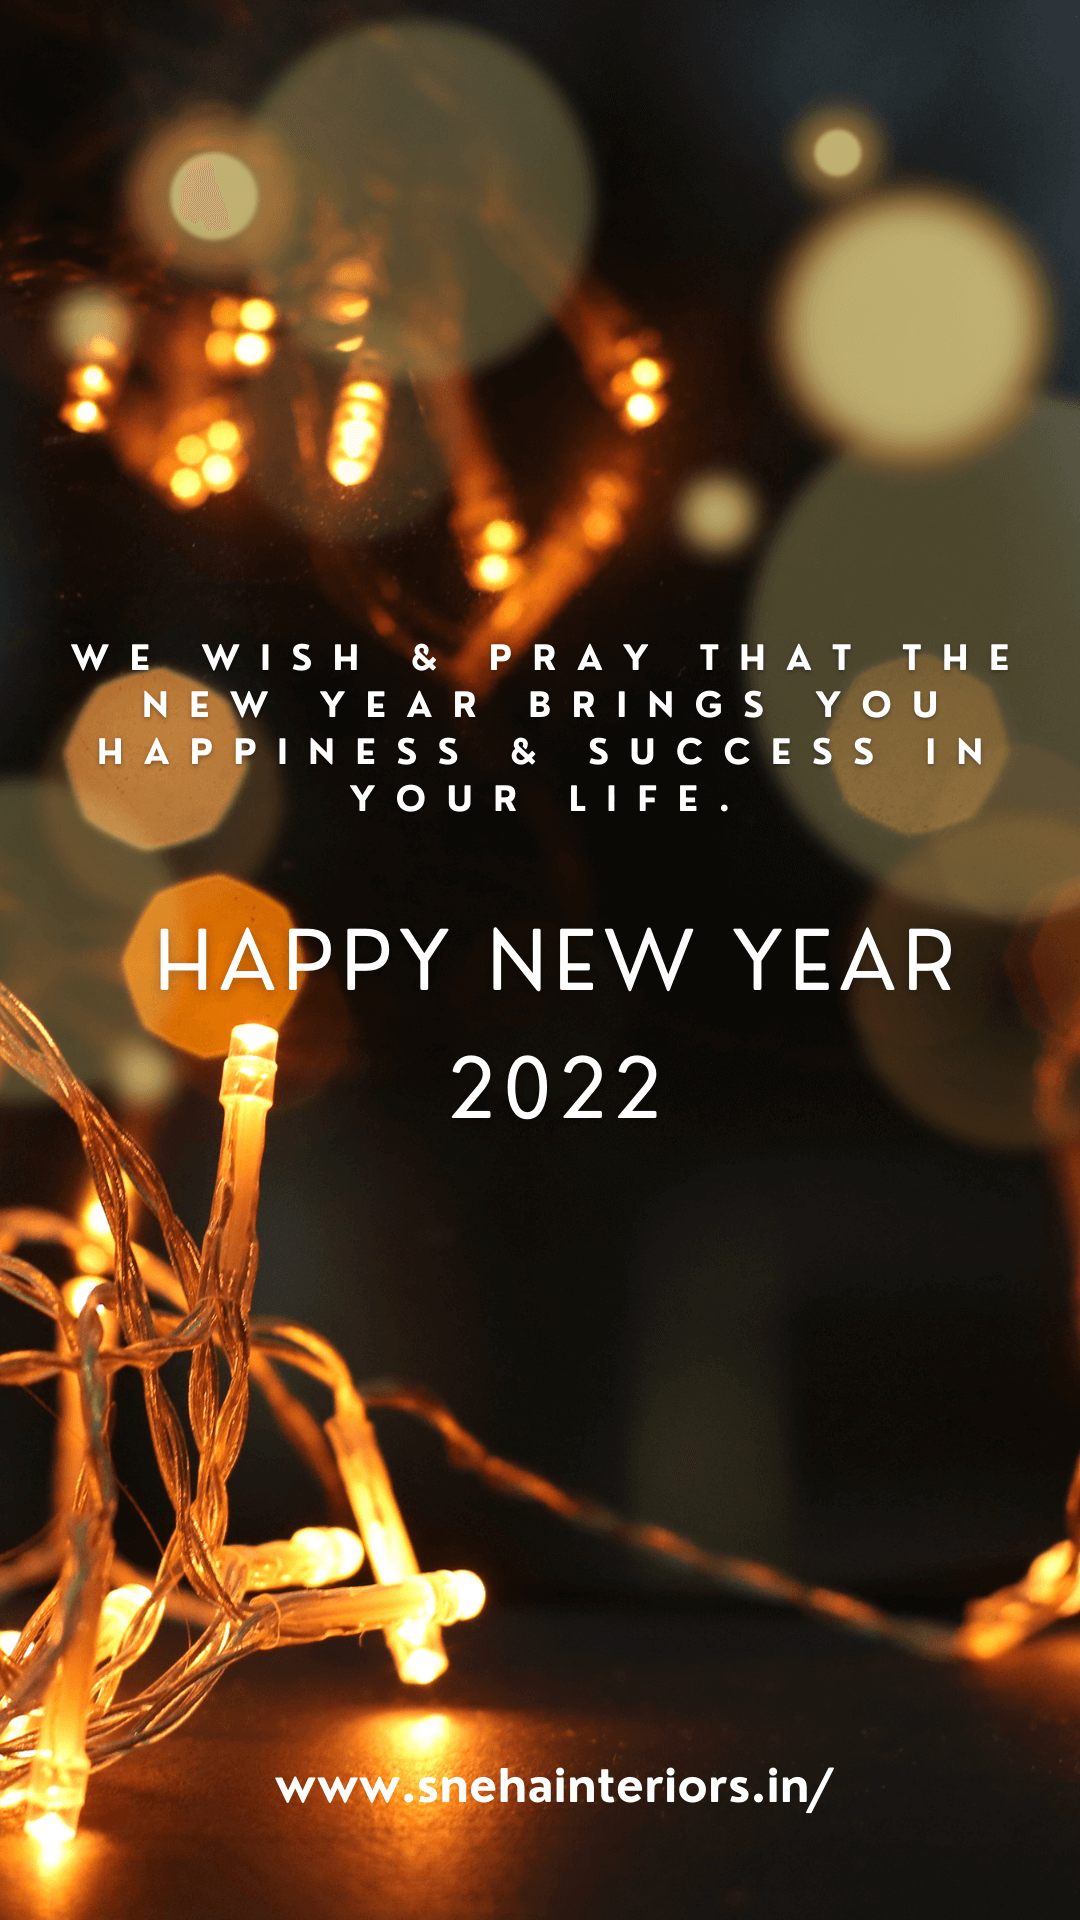 Wishing A Very Happy New Year 2022